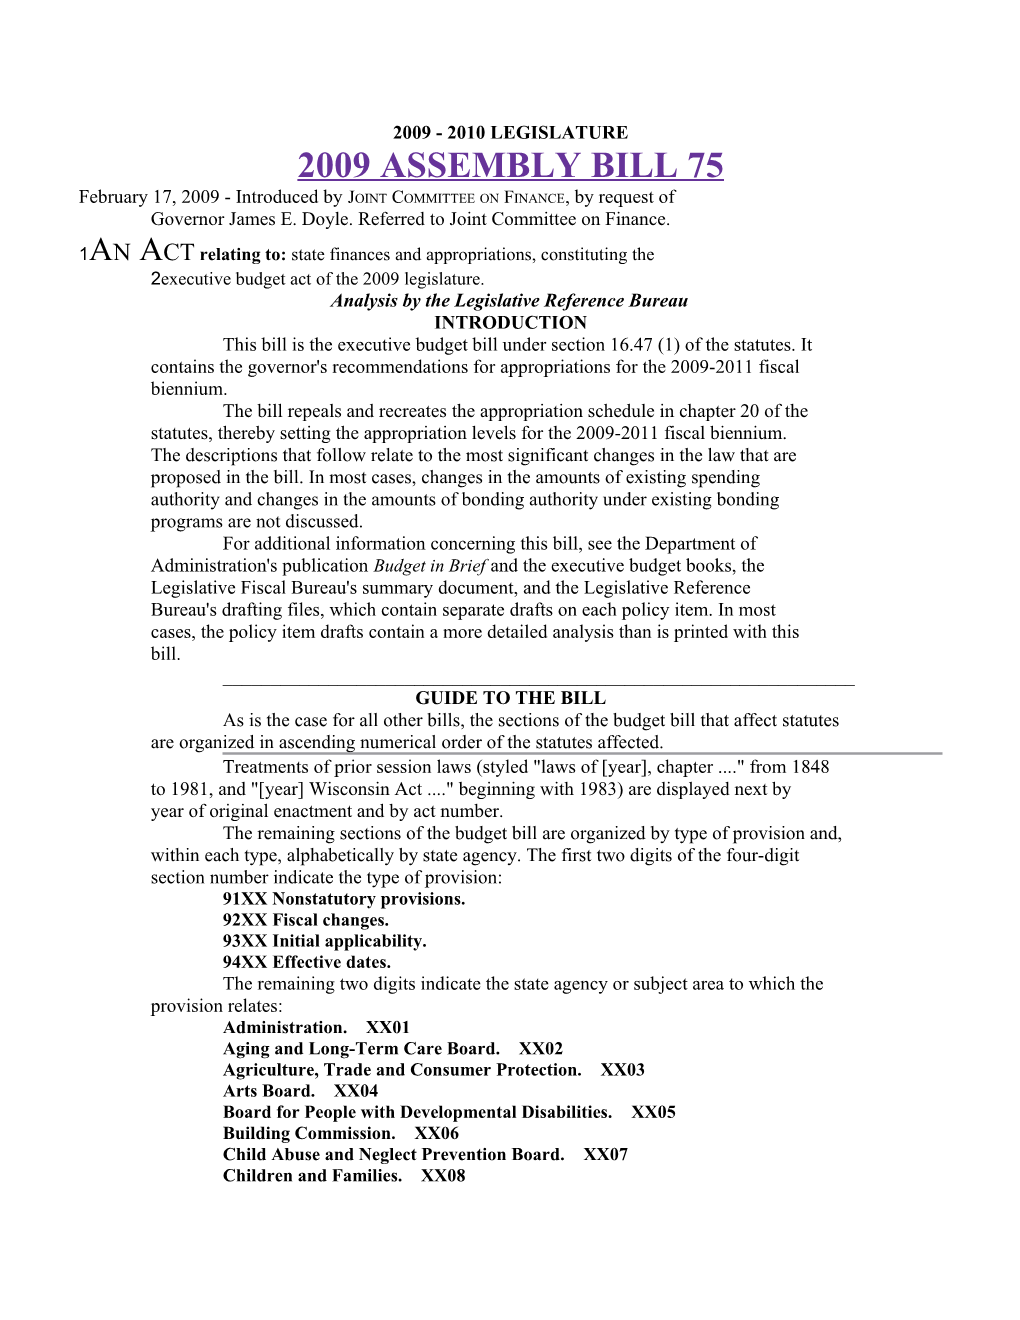 2009 Assembly Bill 75